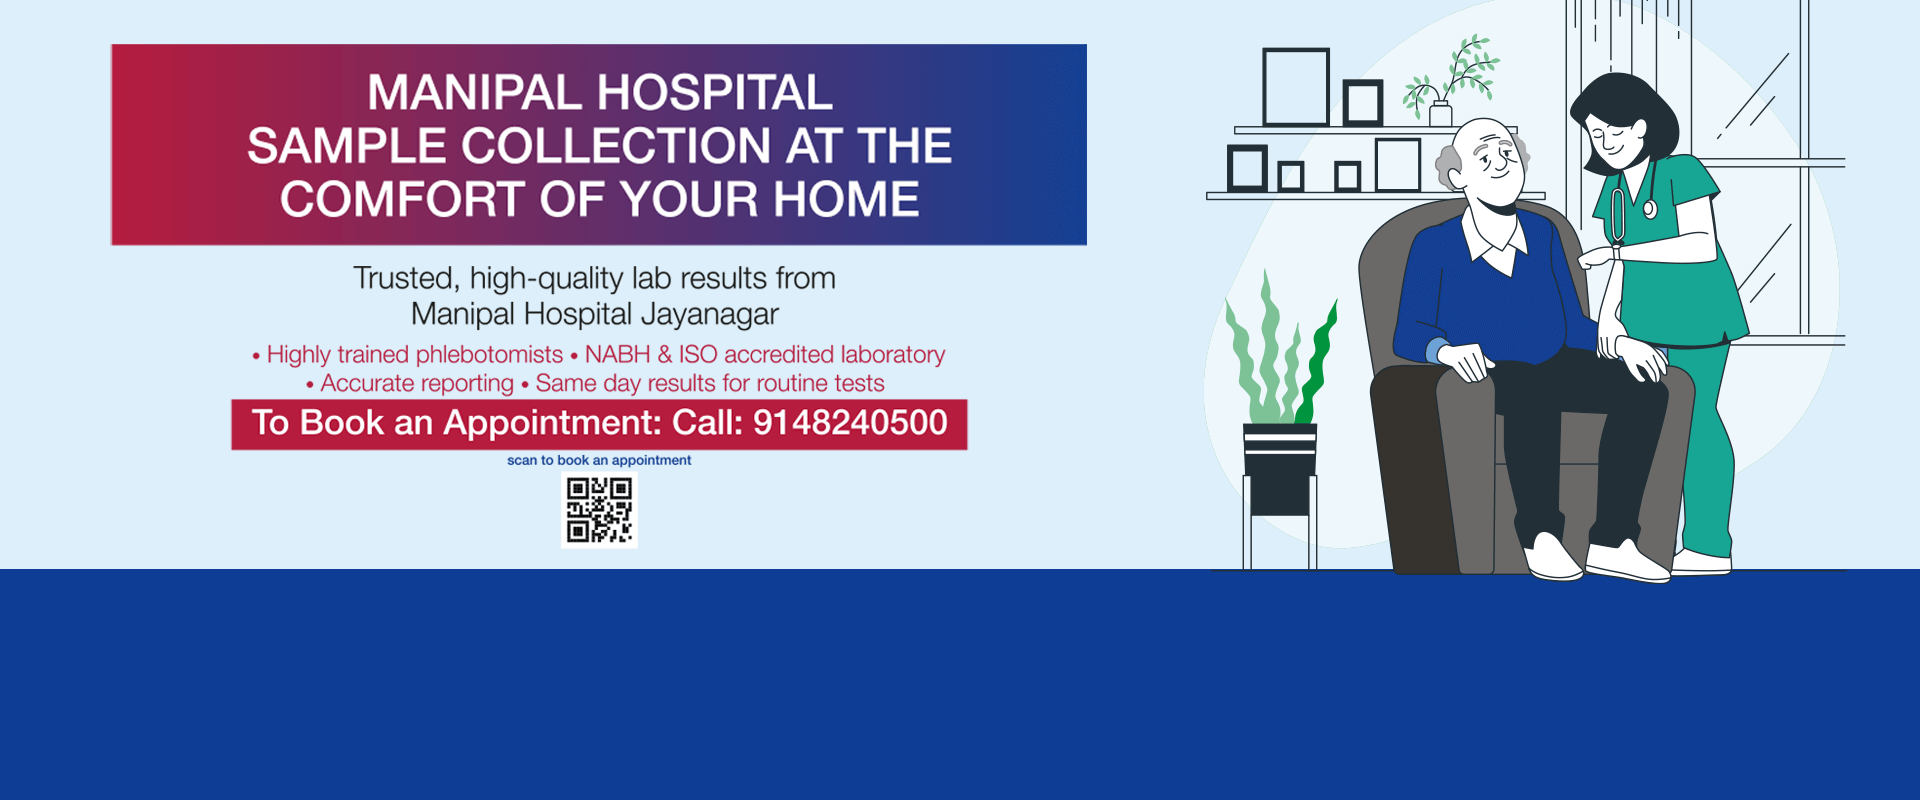 Multispeciality Hospital in Malleshwaram Near Rajajinagar, Yeshwantapur- Manipal Hospitals